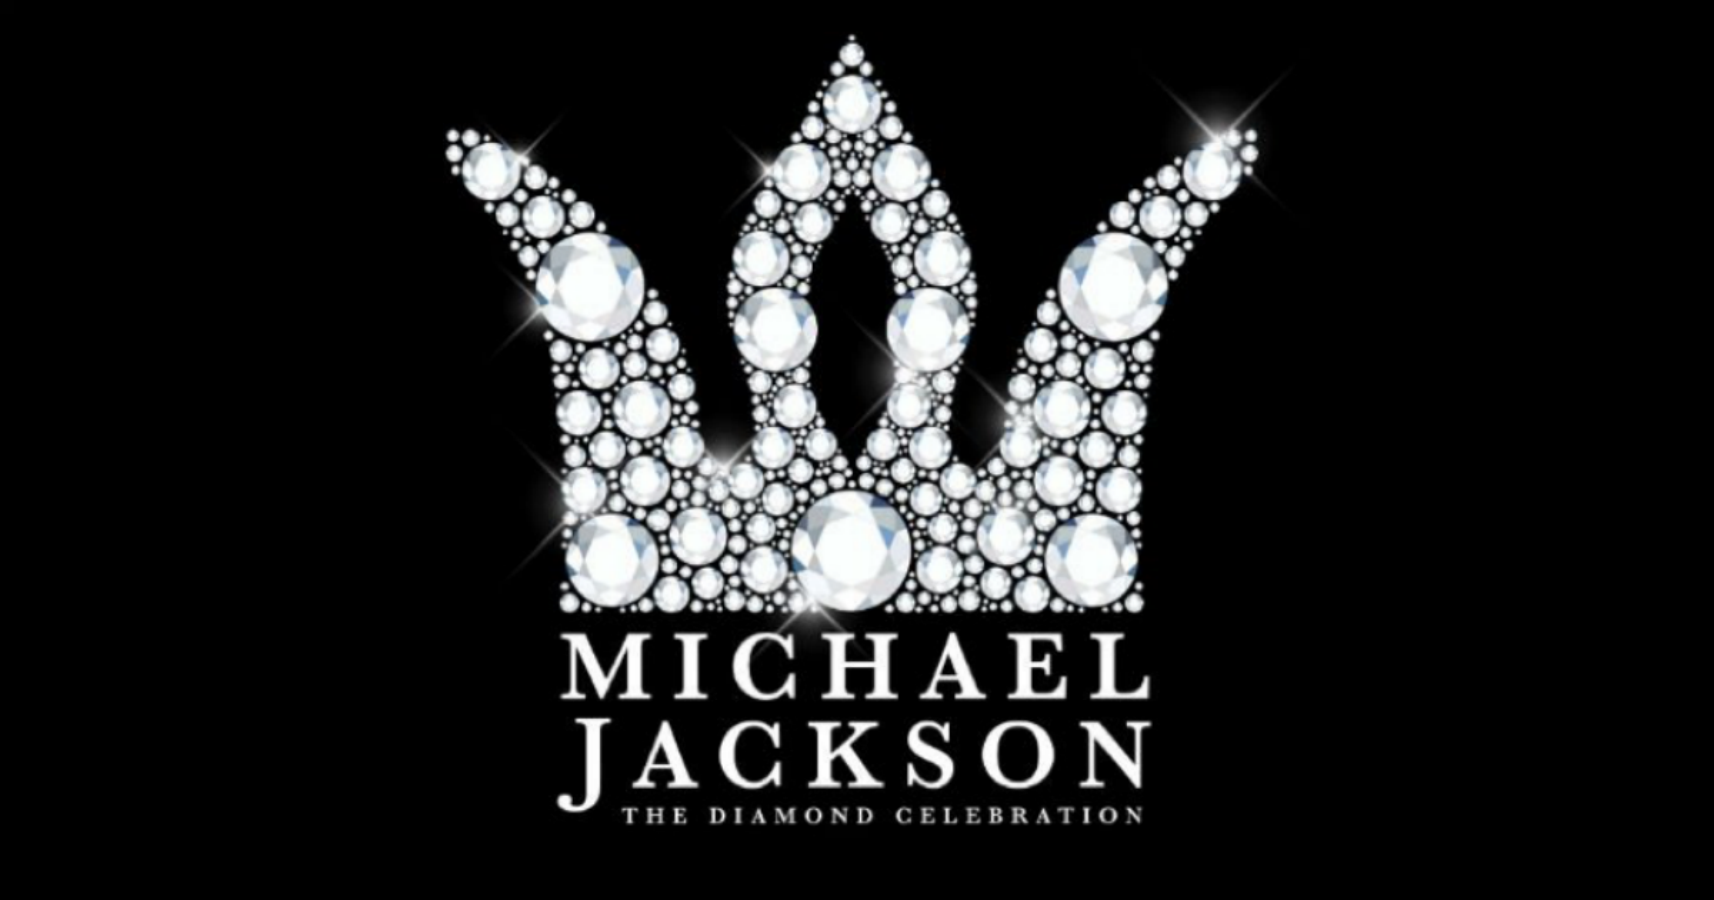 Come Celebrate Michael Jackson’s Diamond Celebration on August 29